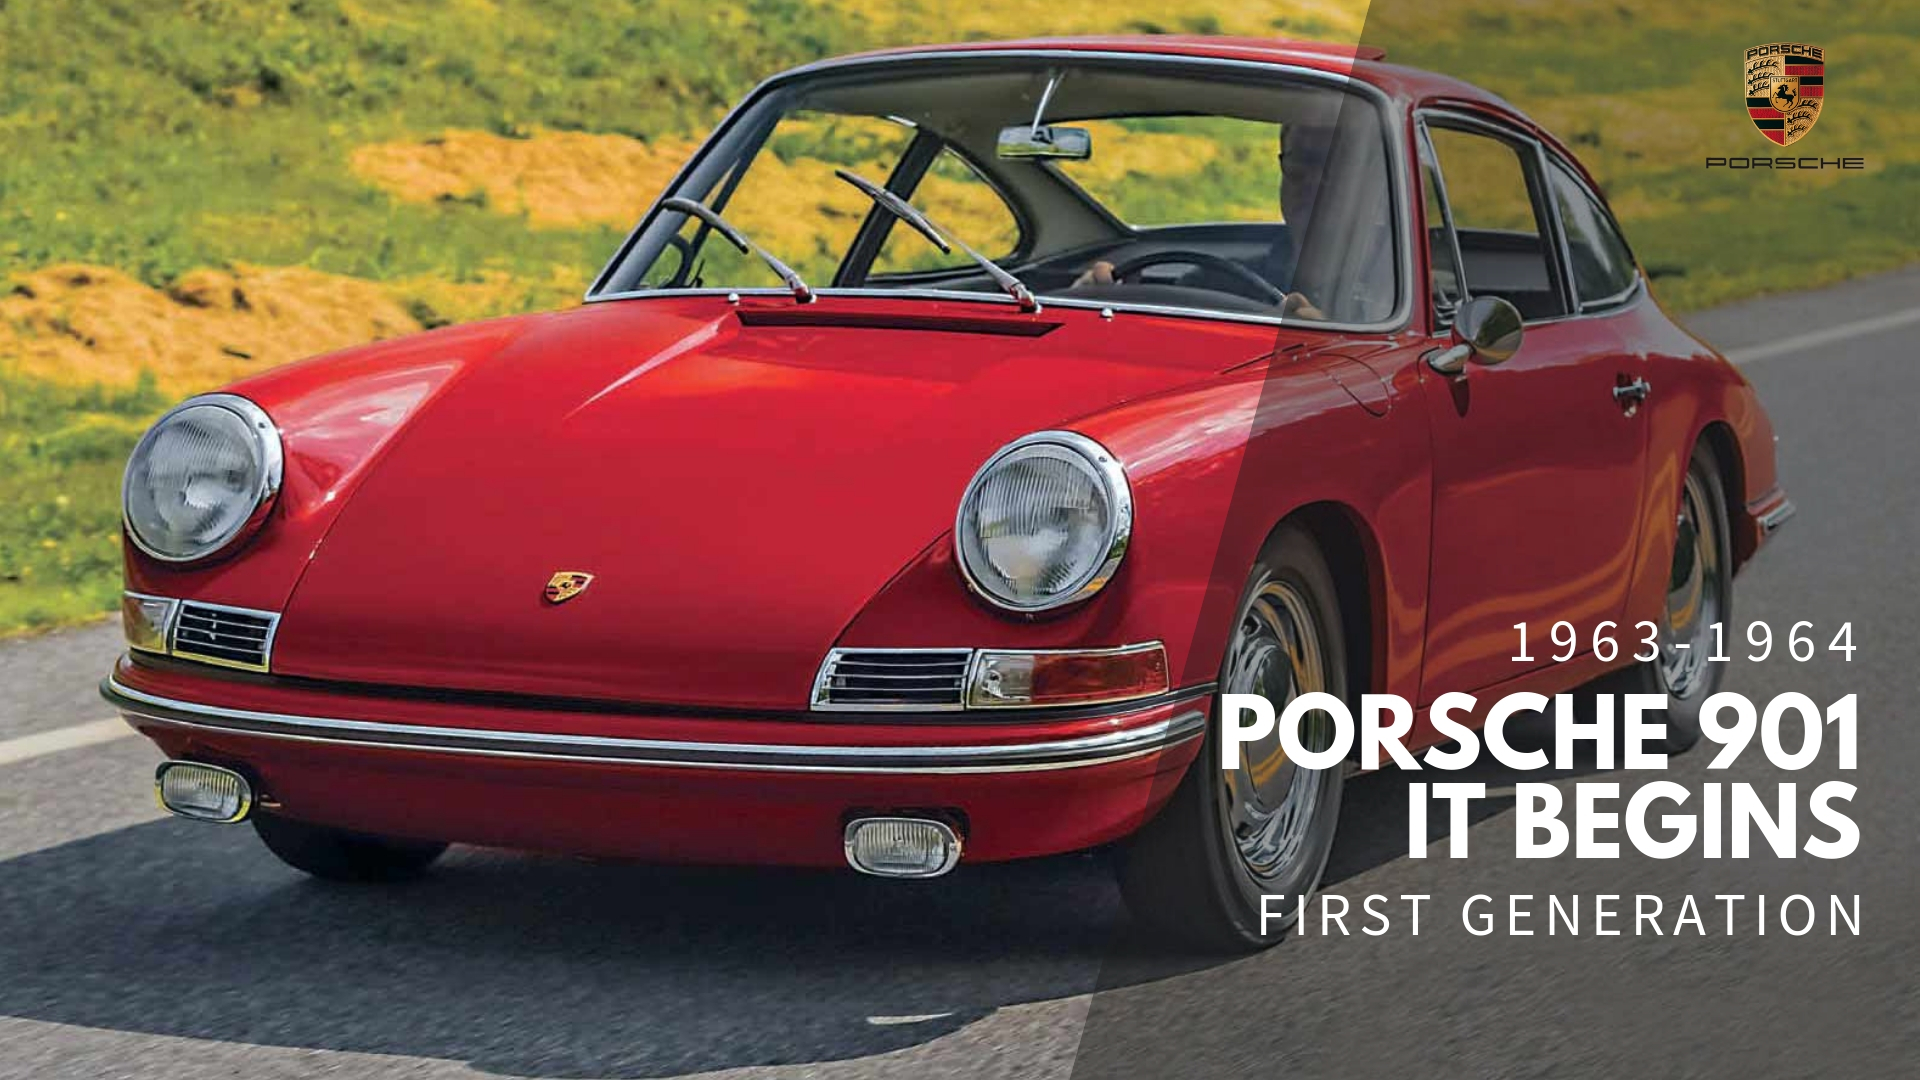 Porsche 901 - The Original (1963-1964)